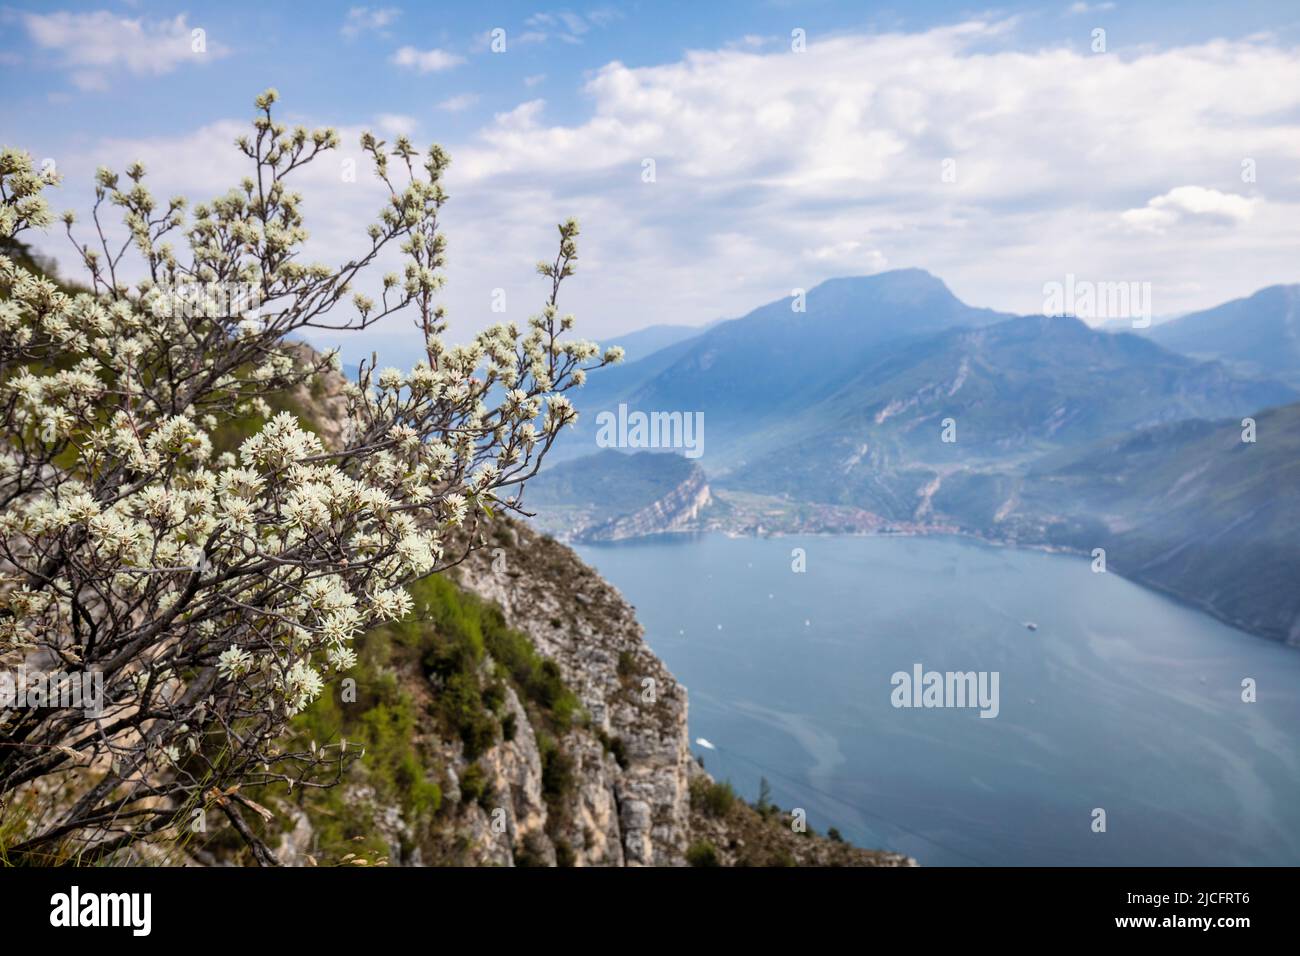 Italy, Trentino, Trento province, Riva del Garda, Pregasina. Landscape from Punta Larici high above the Garda lake Stock Photo